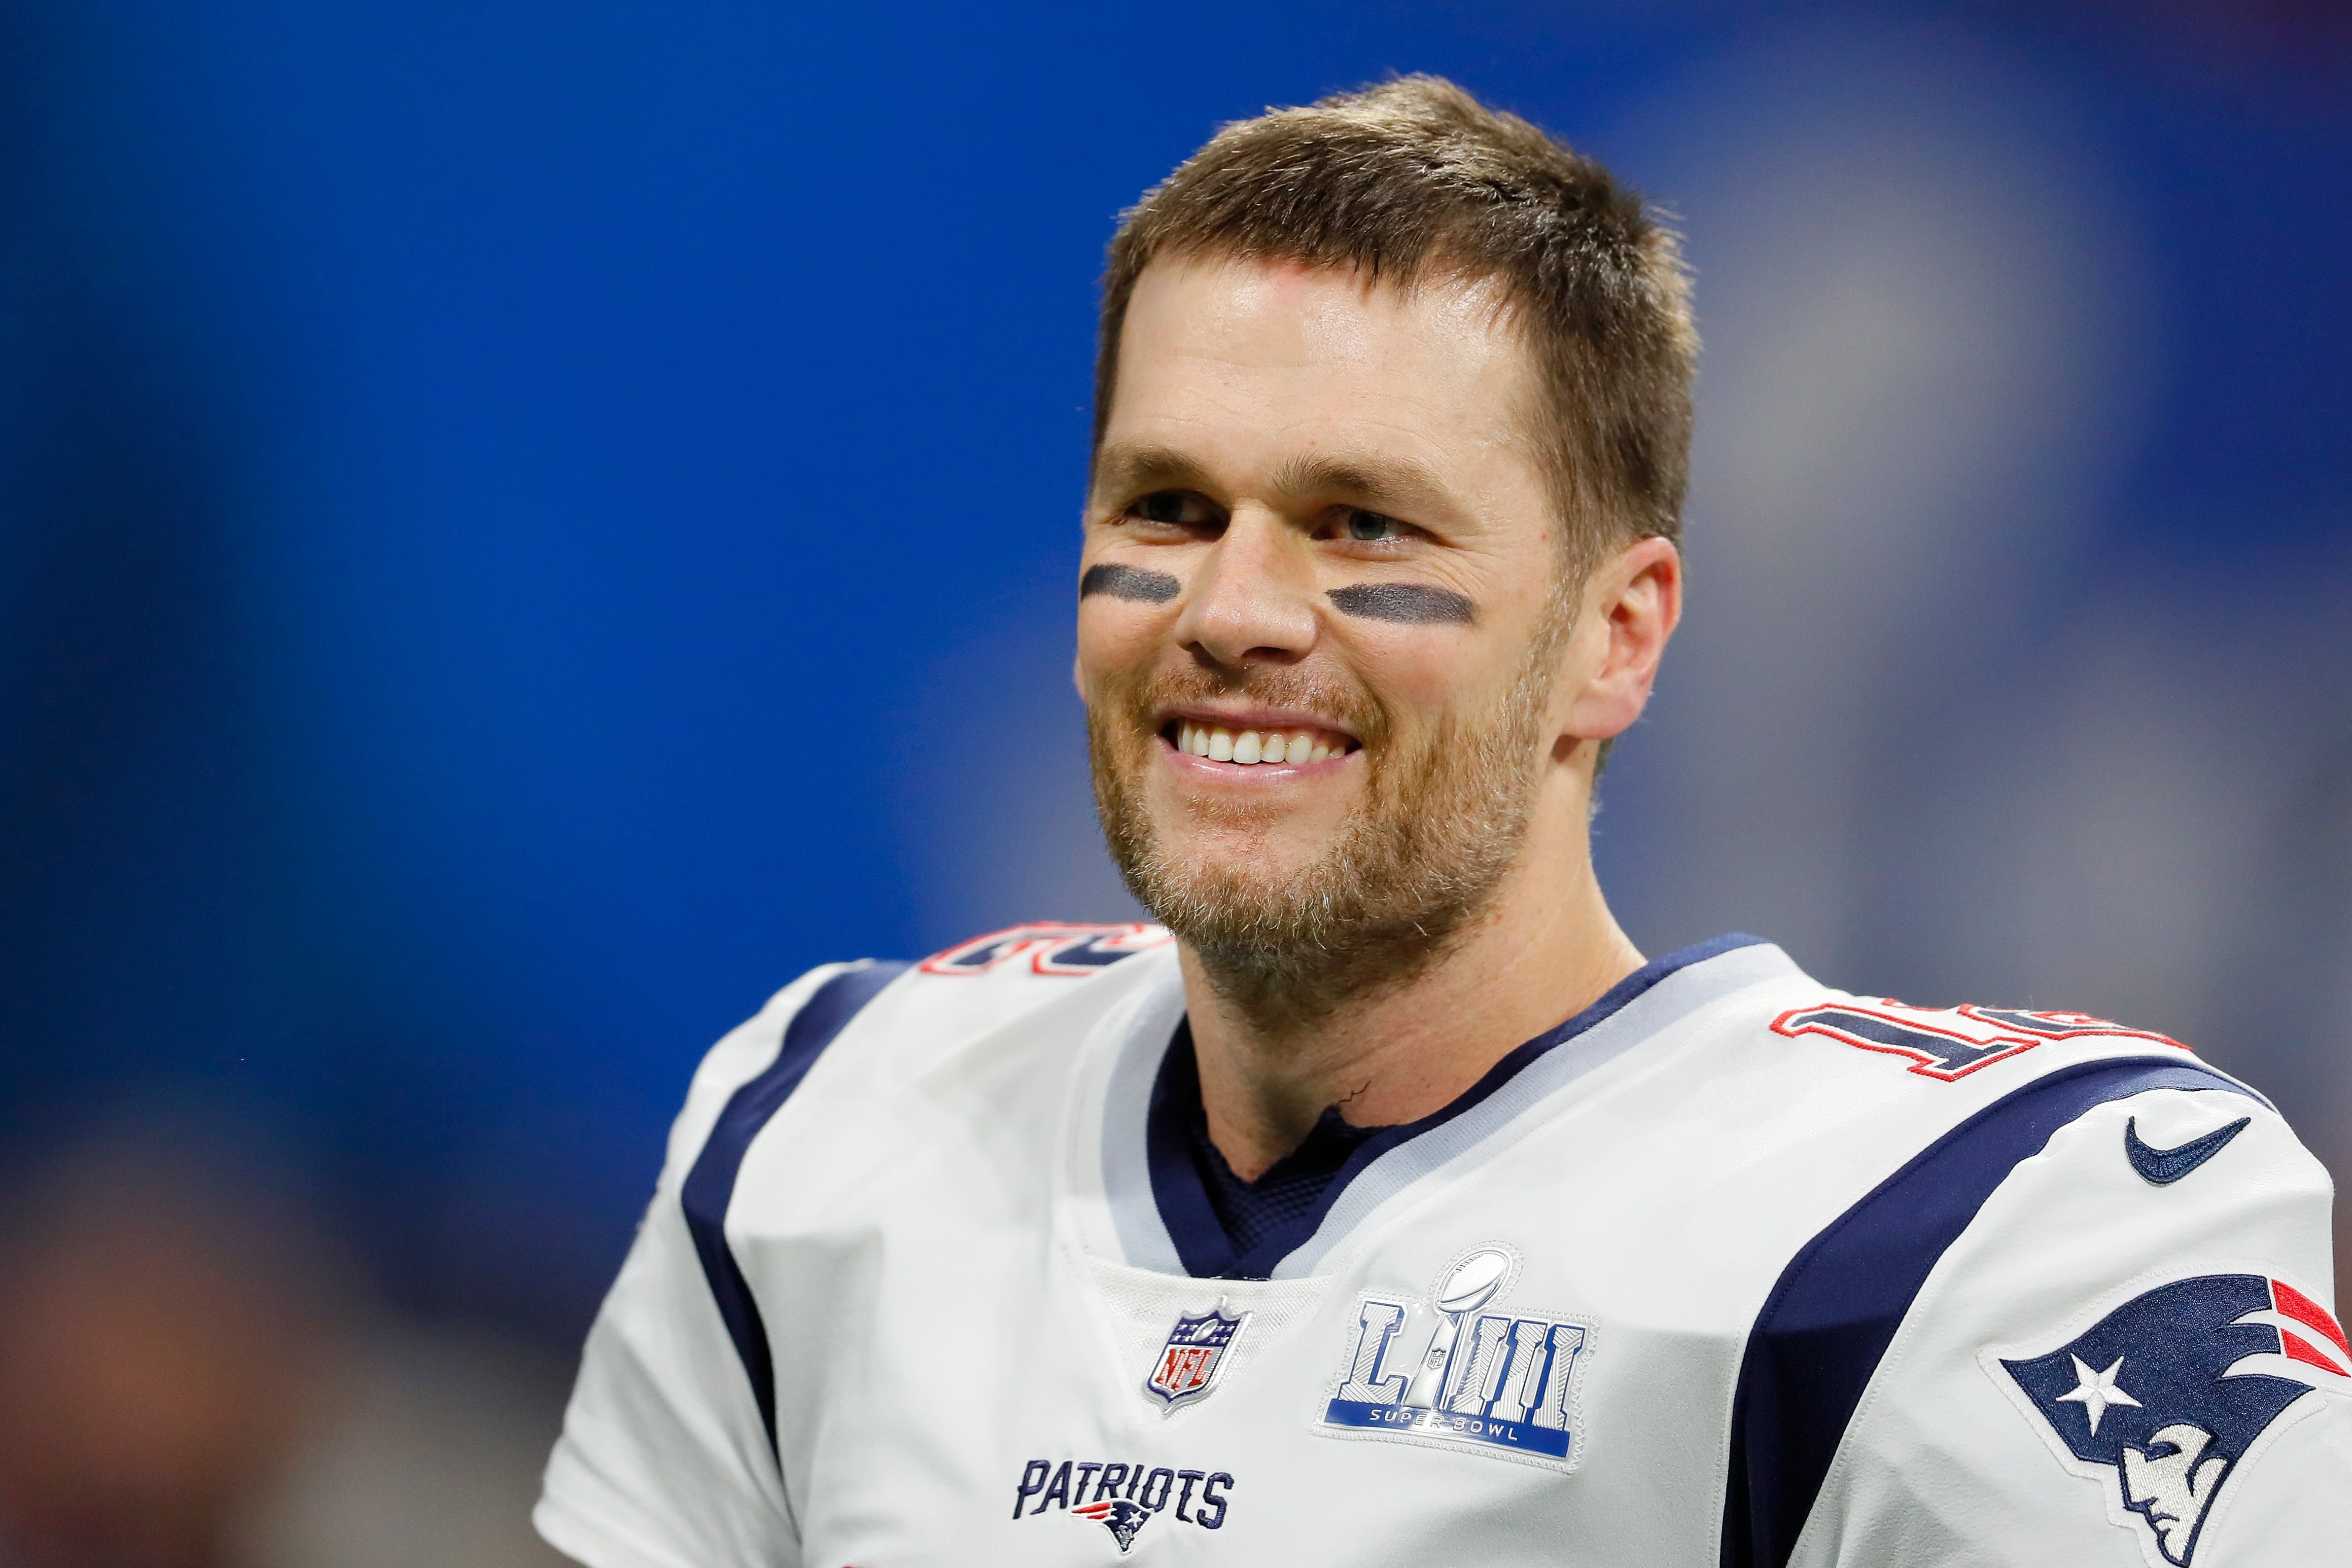 Tom Brady during pregame at Super Bowl LIII in 2019 in Atlanta, Georgia | Source: Getty Images